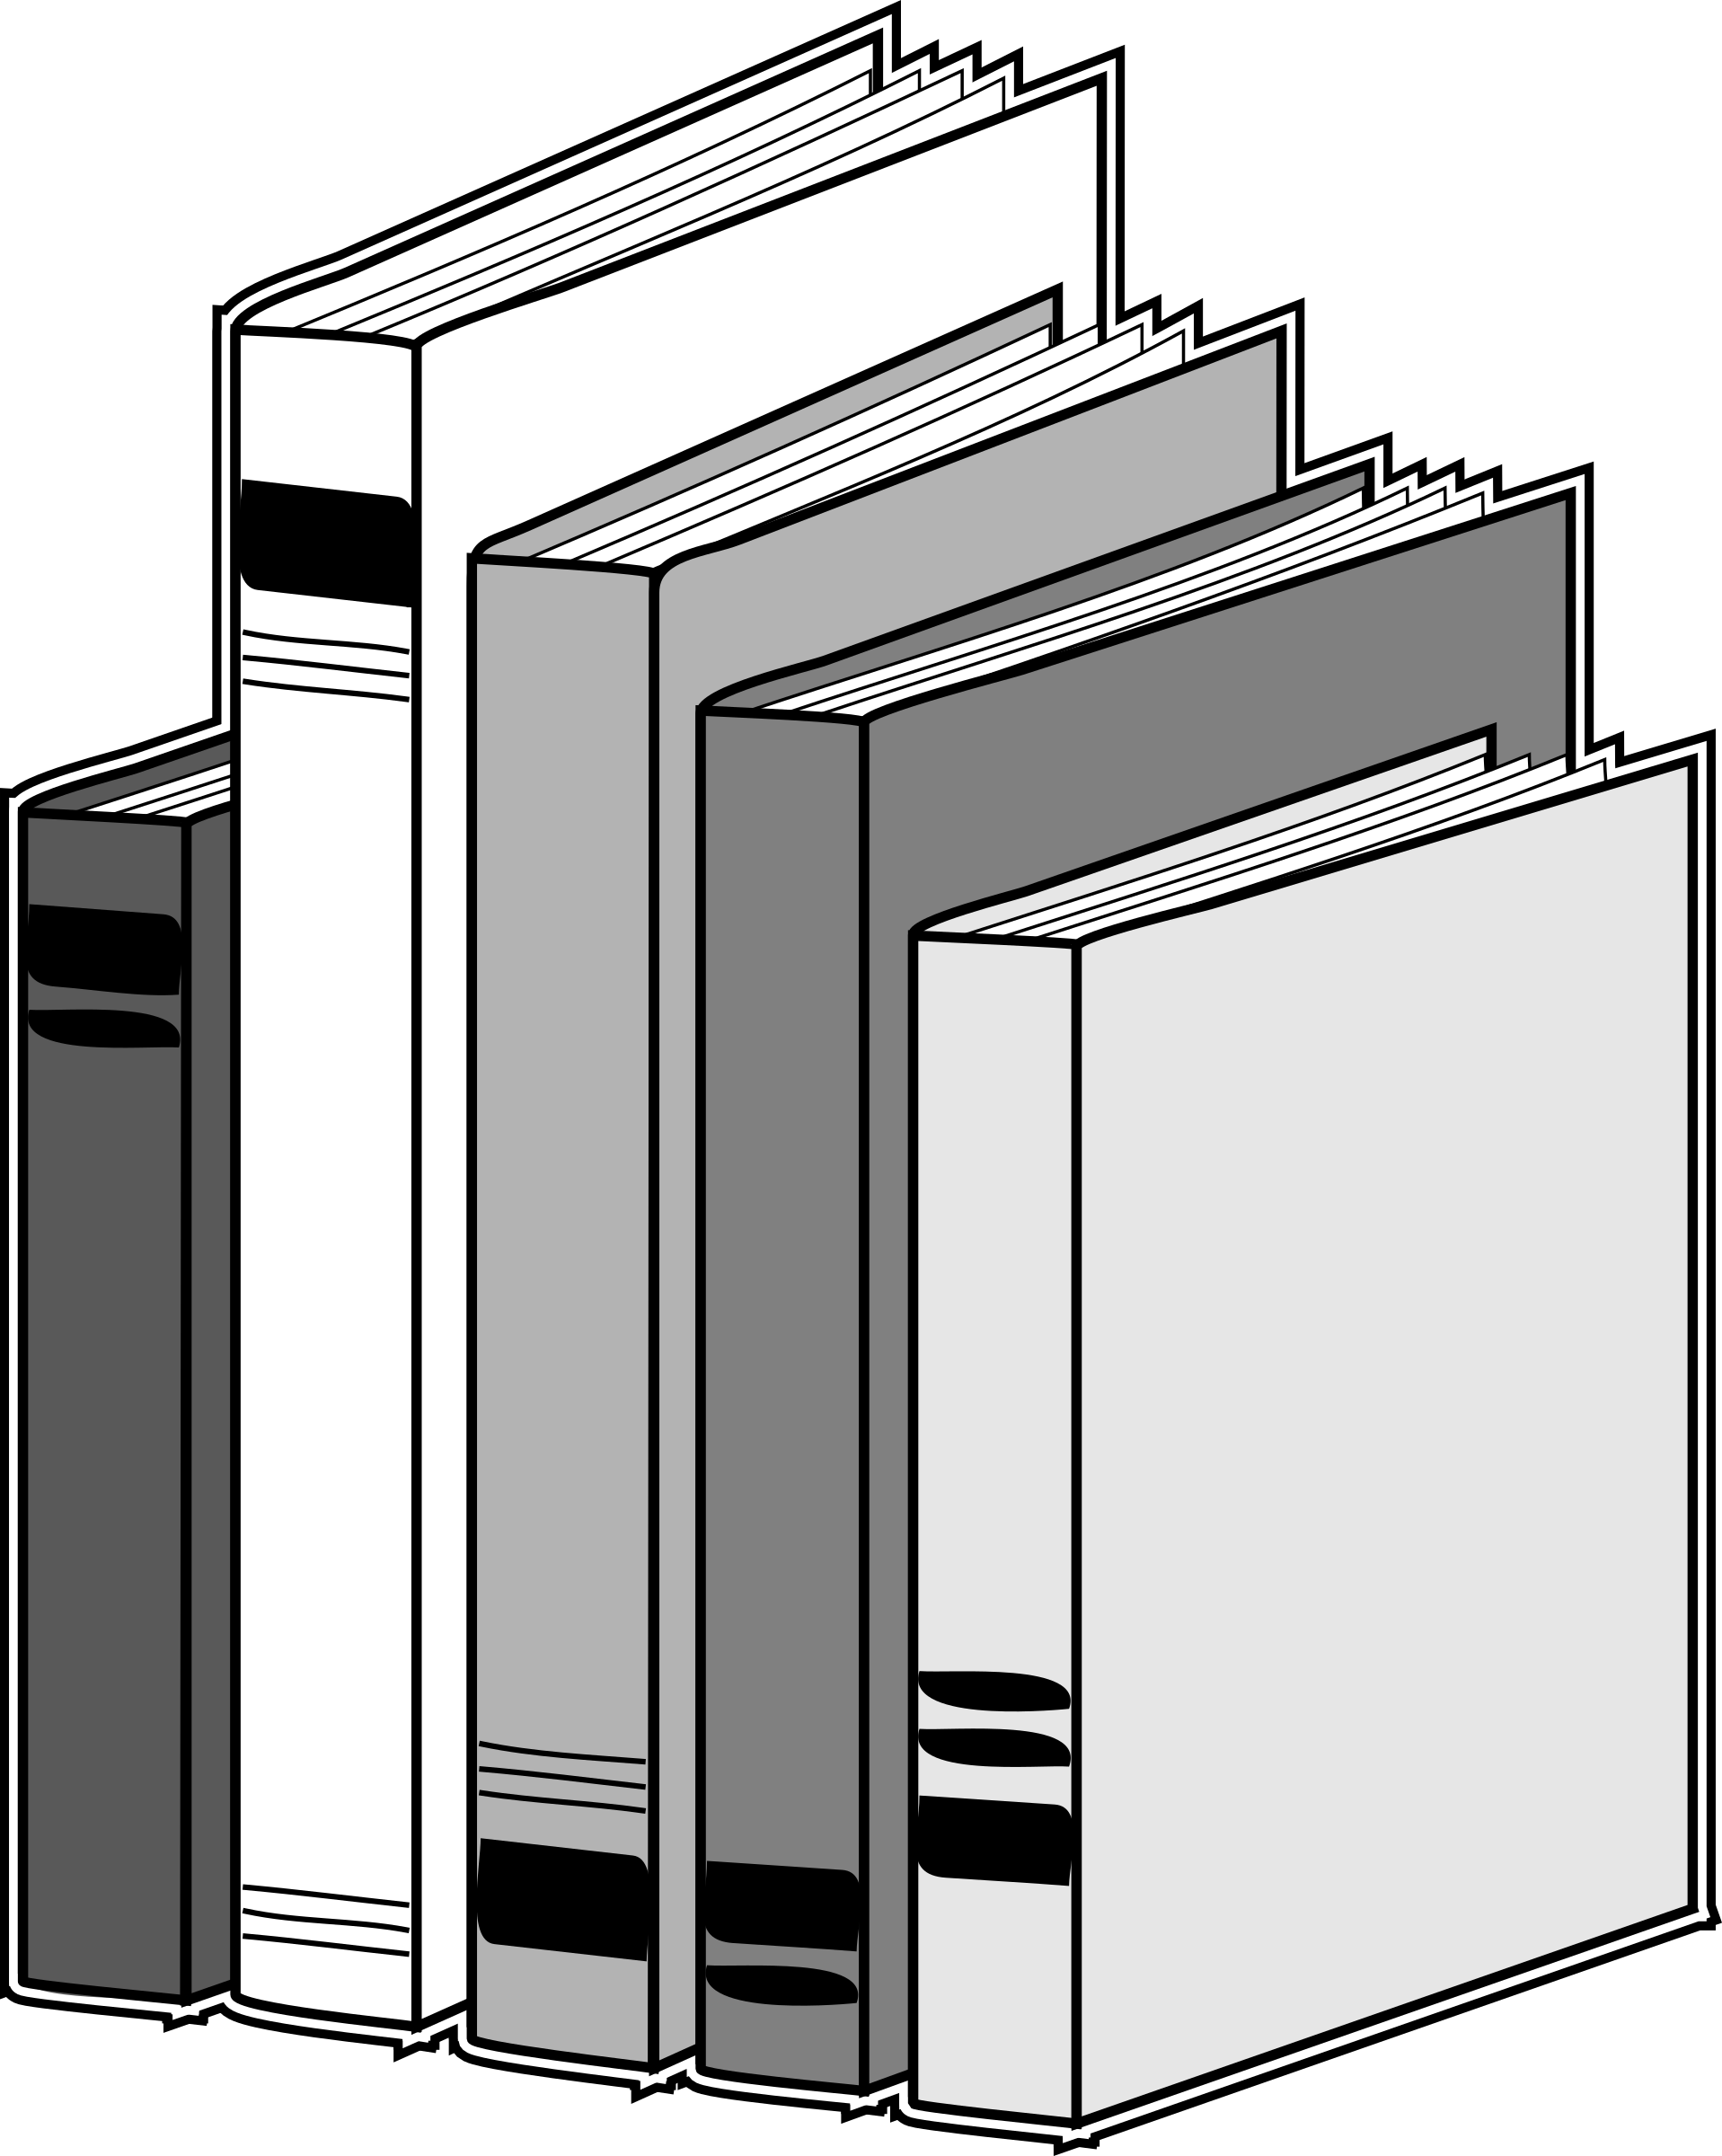 Big Image - 5 Books On A Shelf (1917x2400)